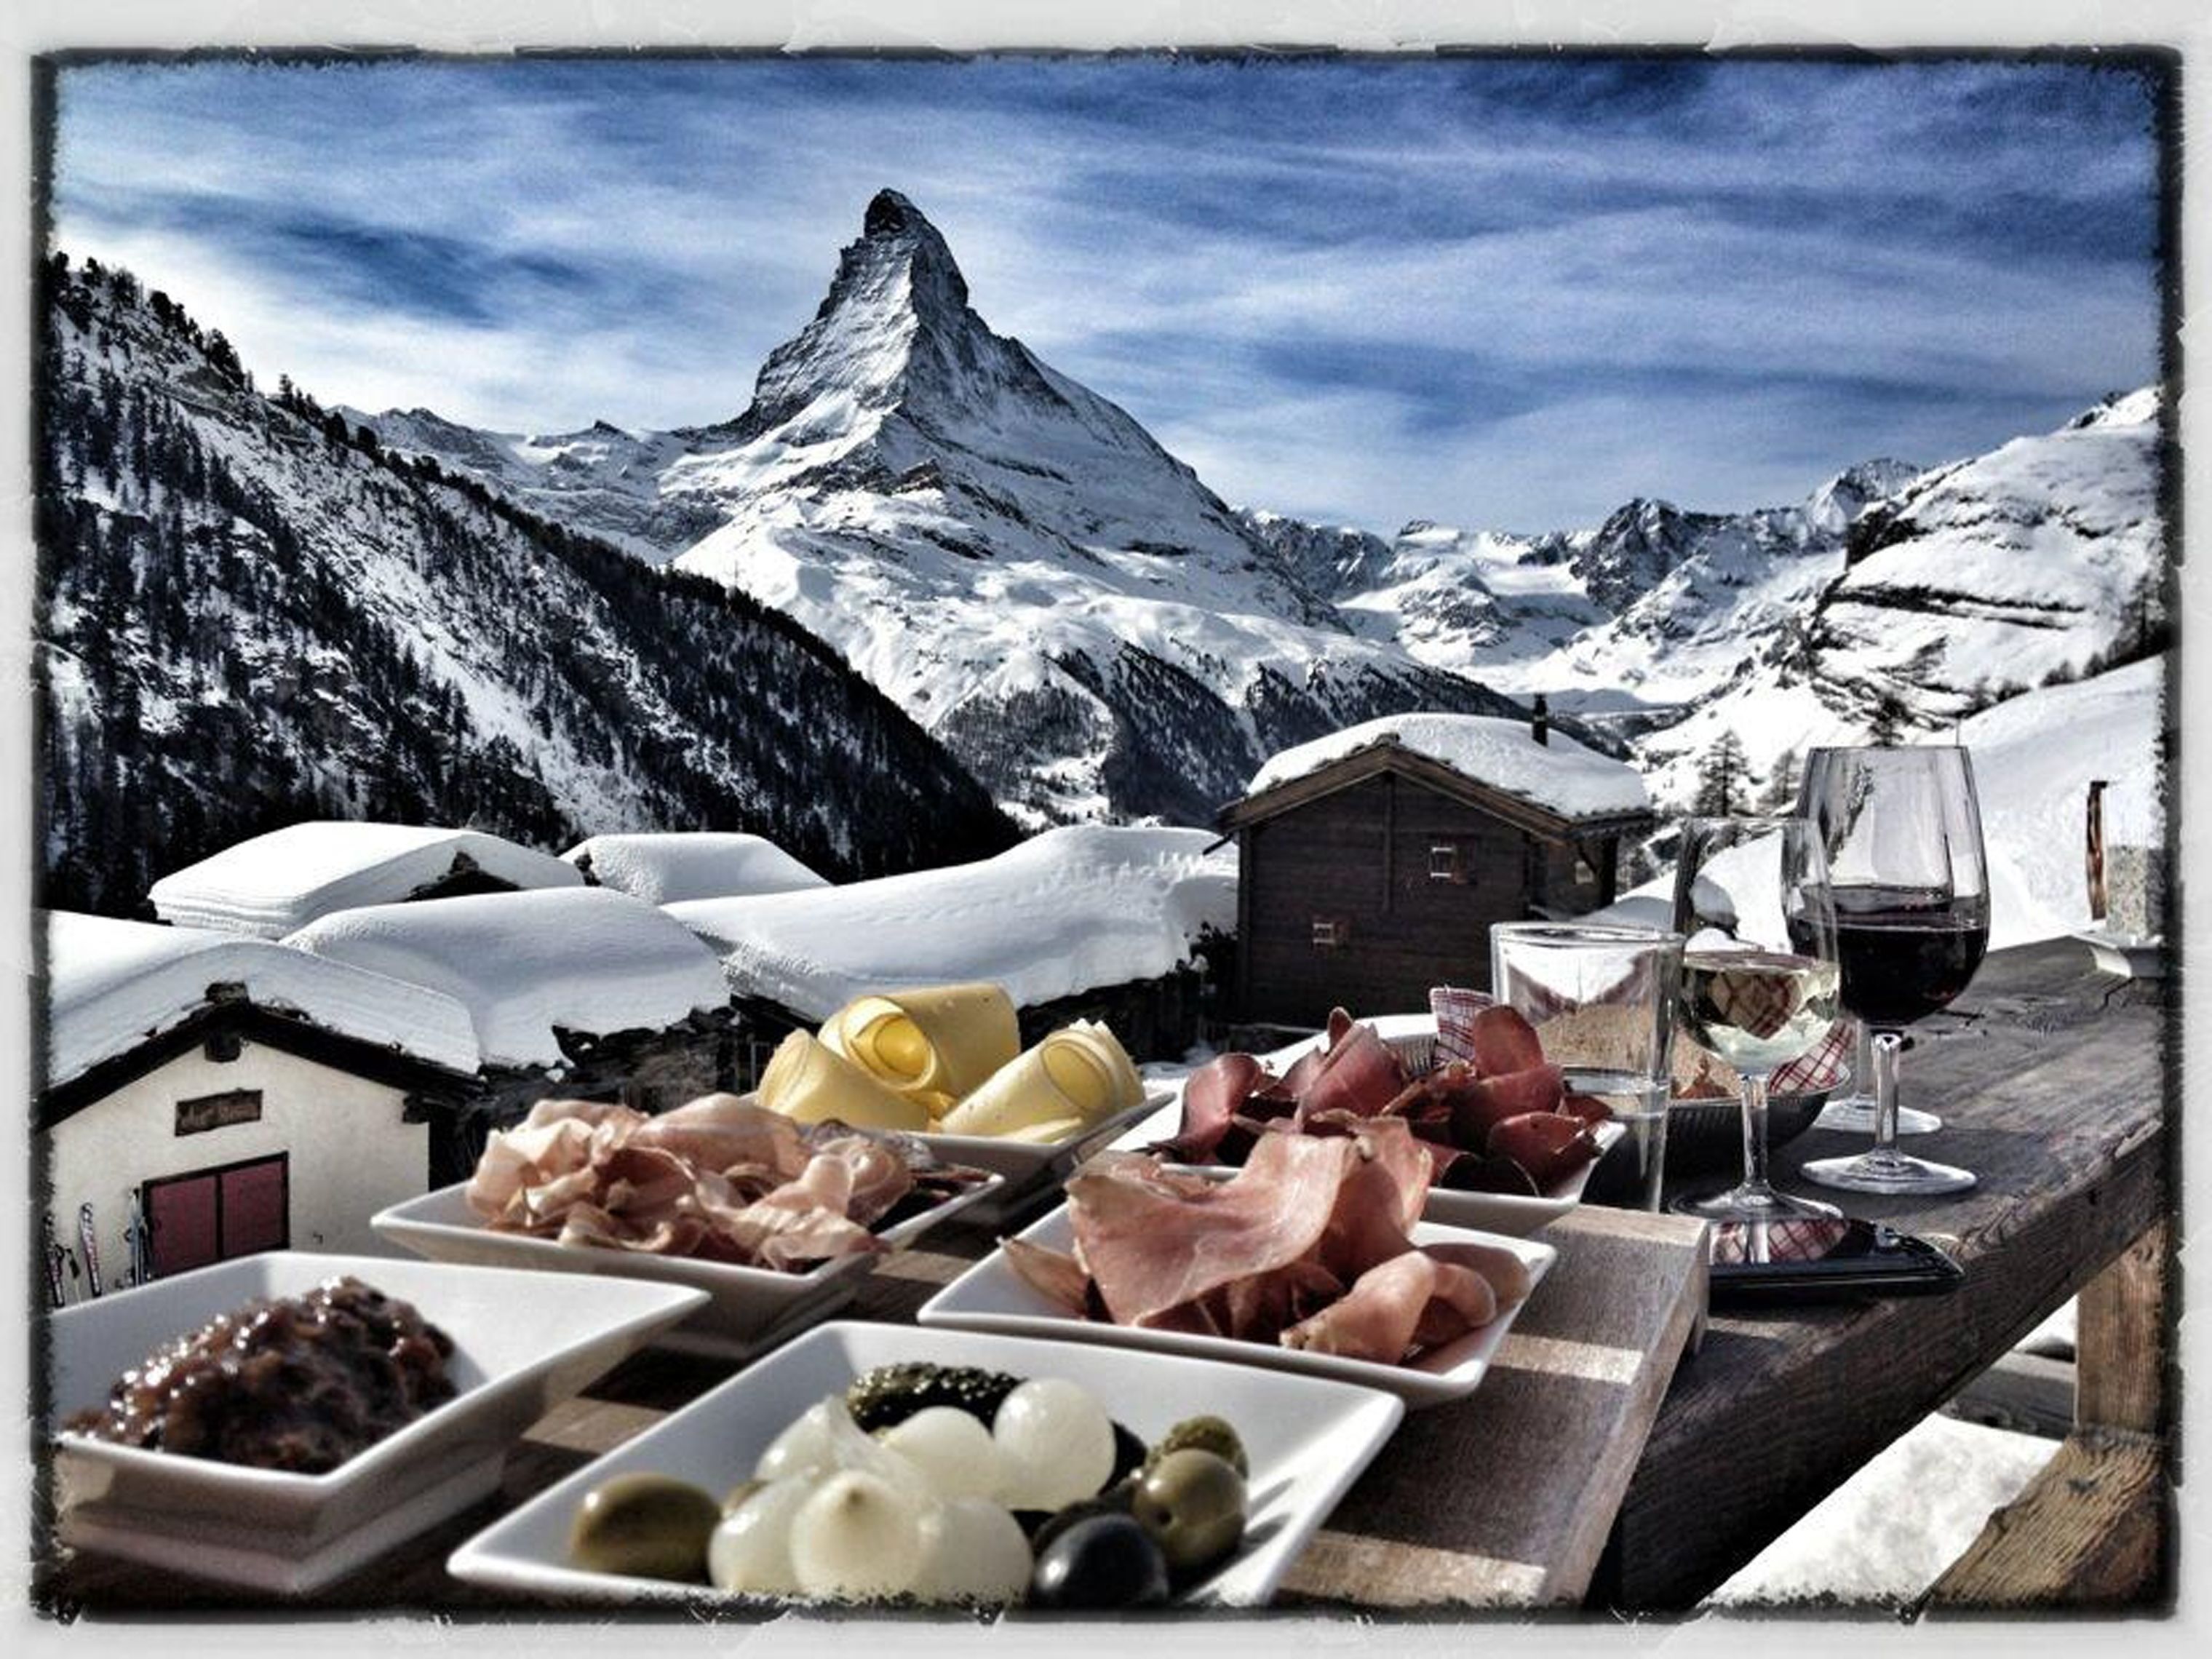 Ski cuisine: Eating on top of the world